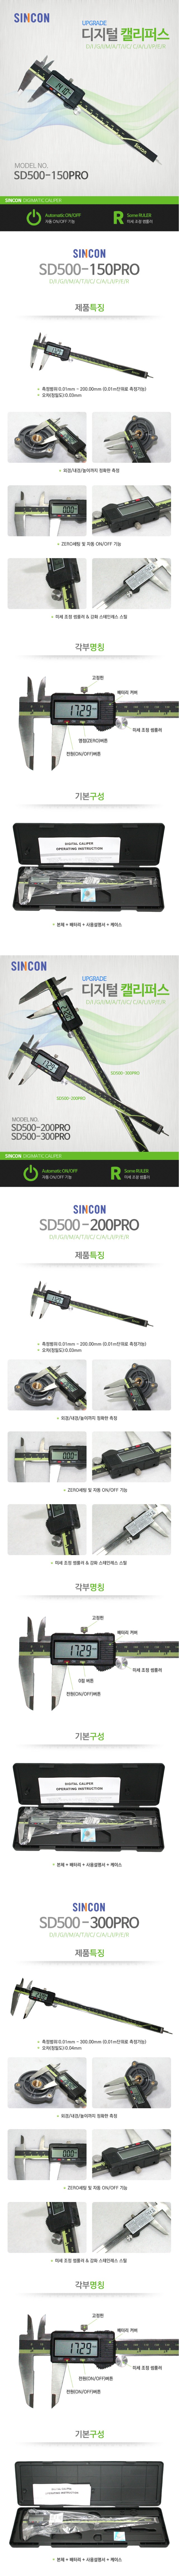 SINCON SD-500-150PRO 150mm digital Vernier Calipers Genuine Korean Brand Details about    